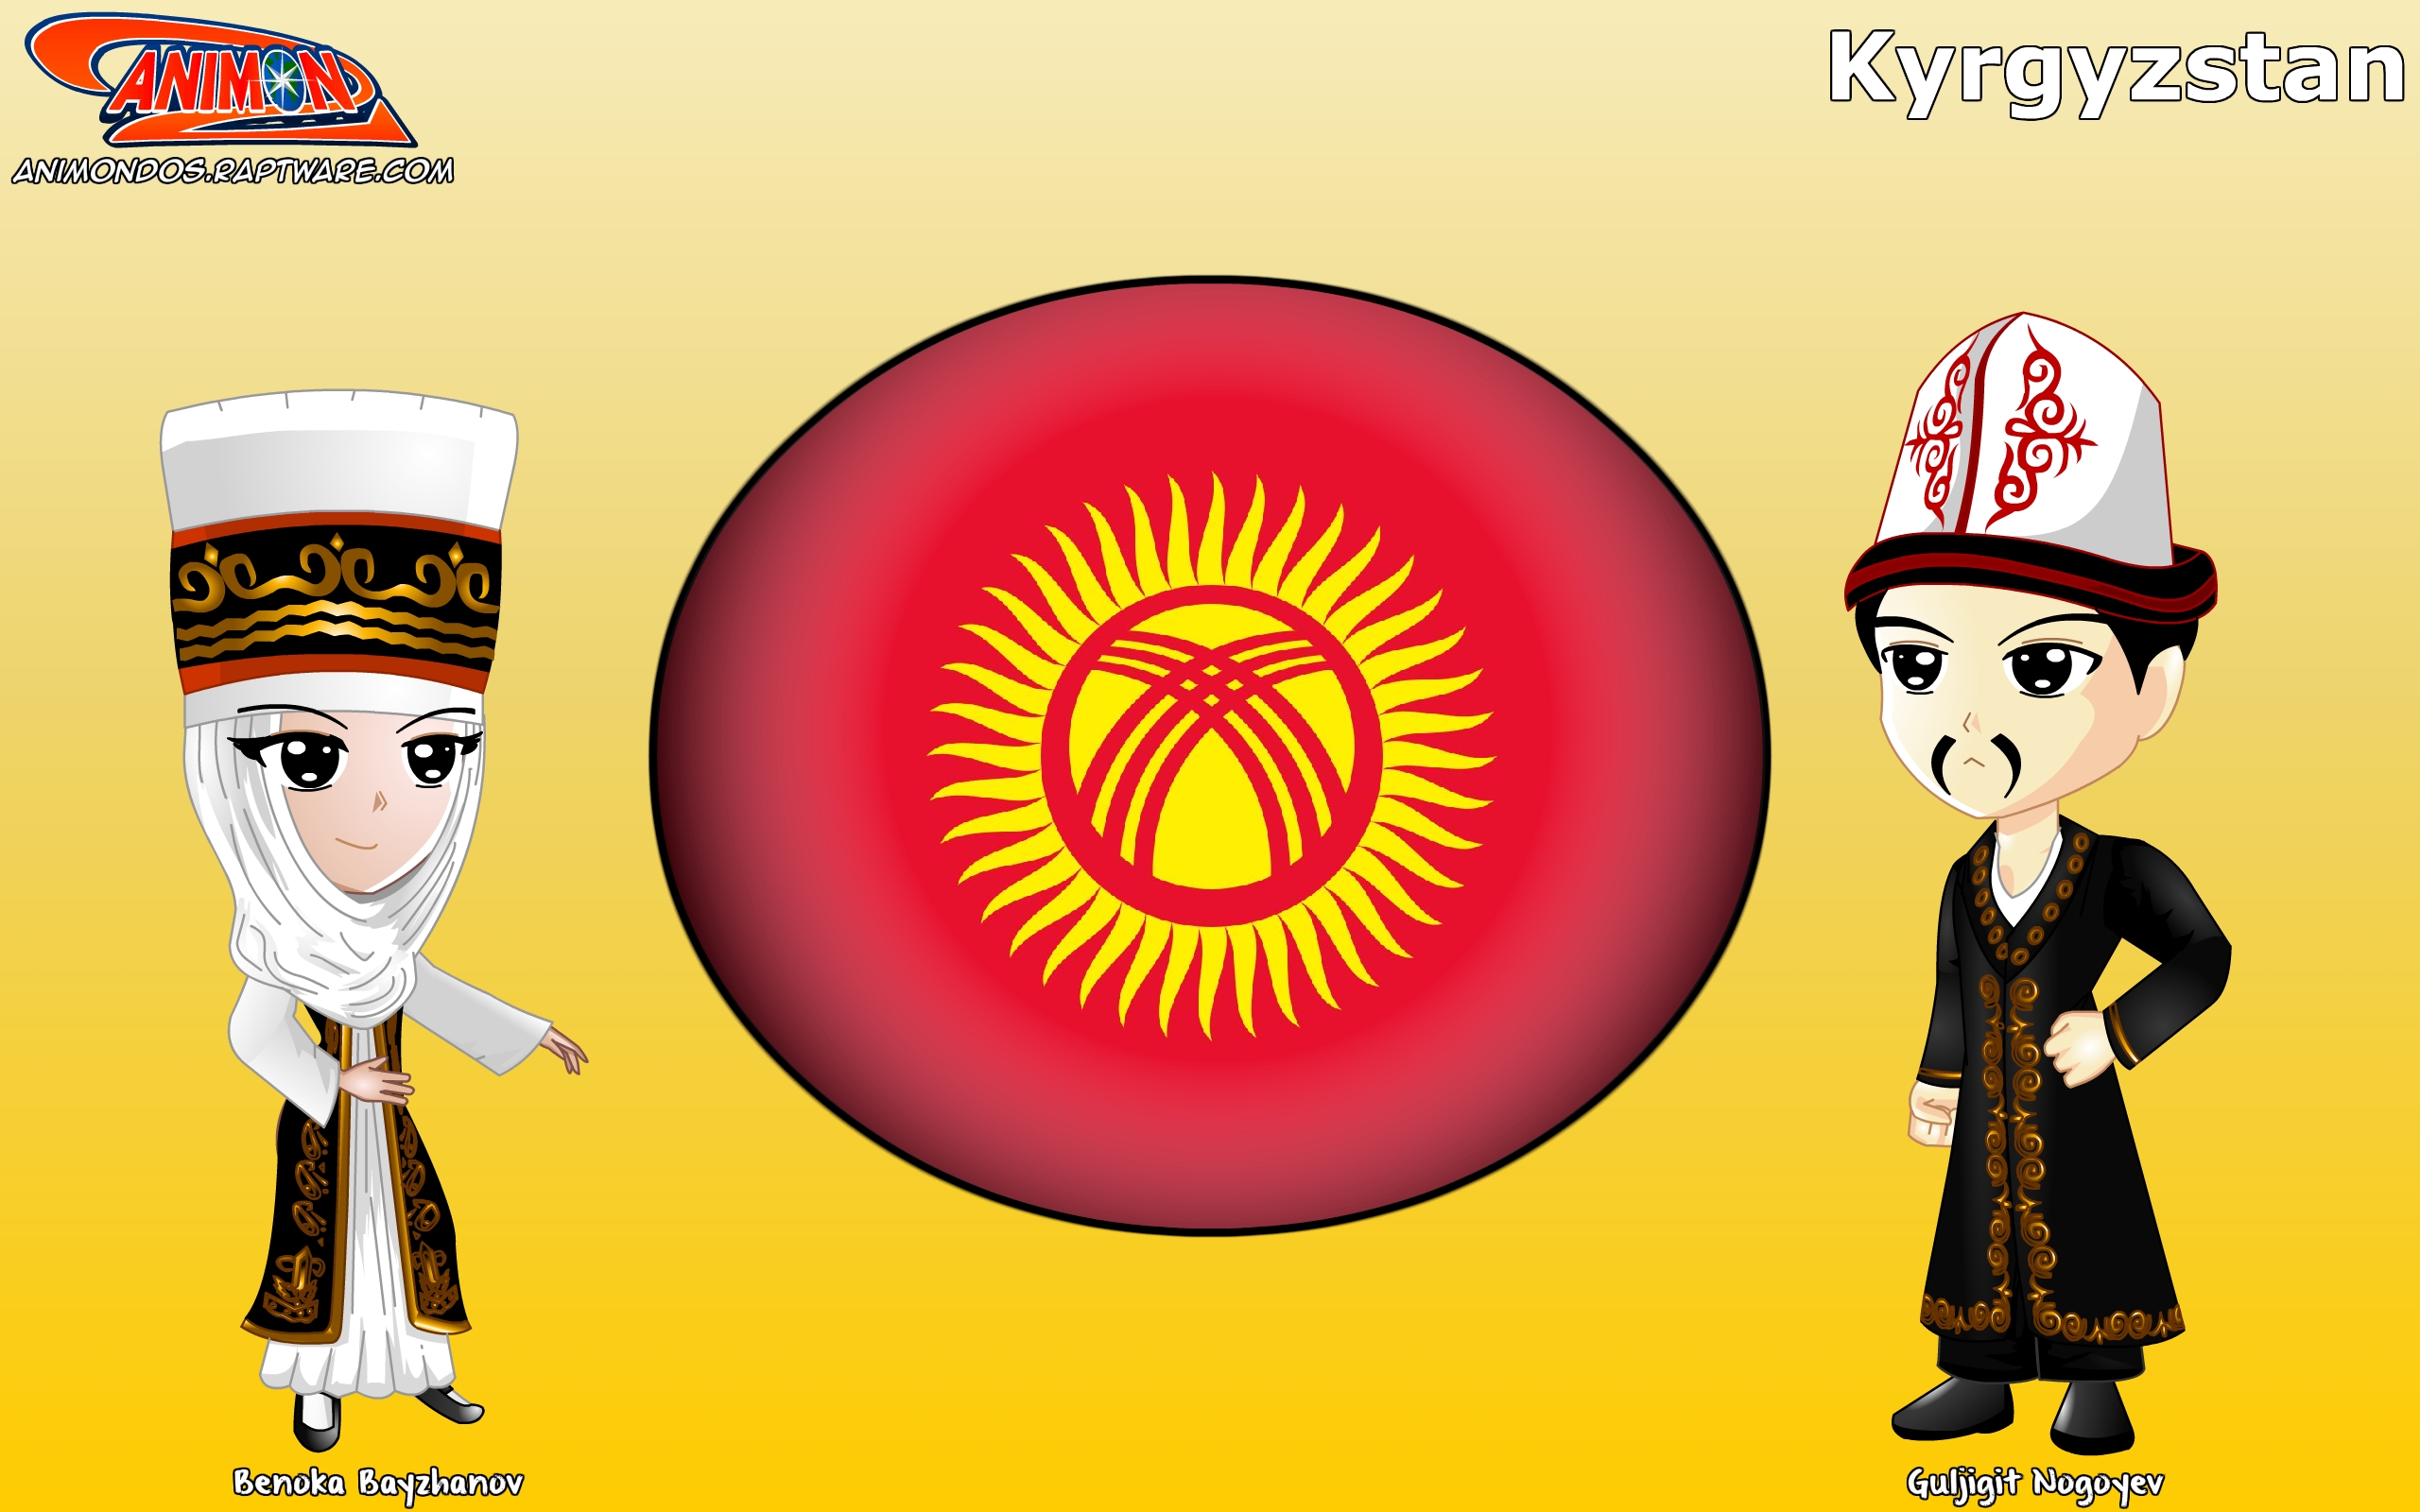 Chibi Kyrgyzstan - Animondos -